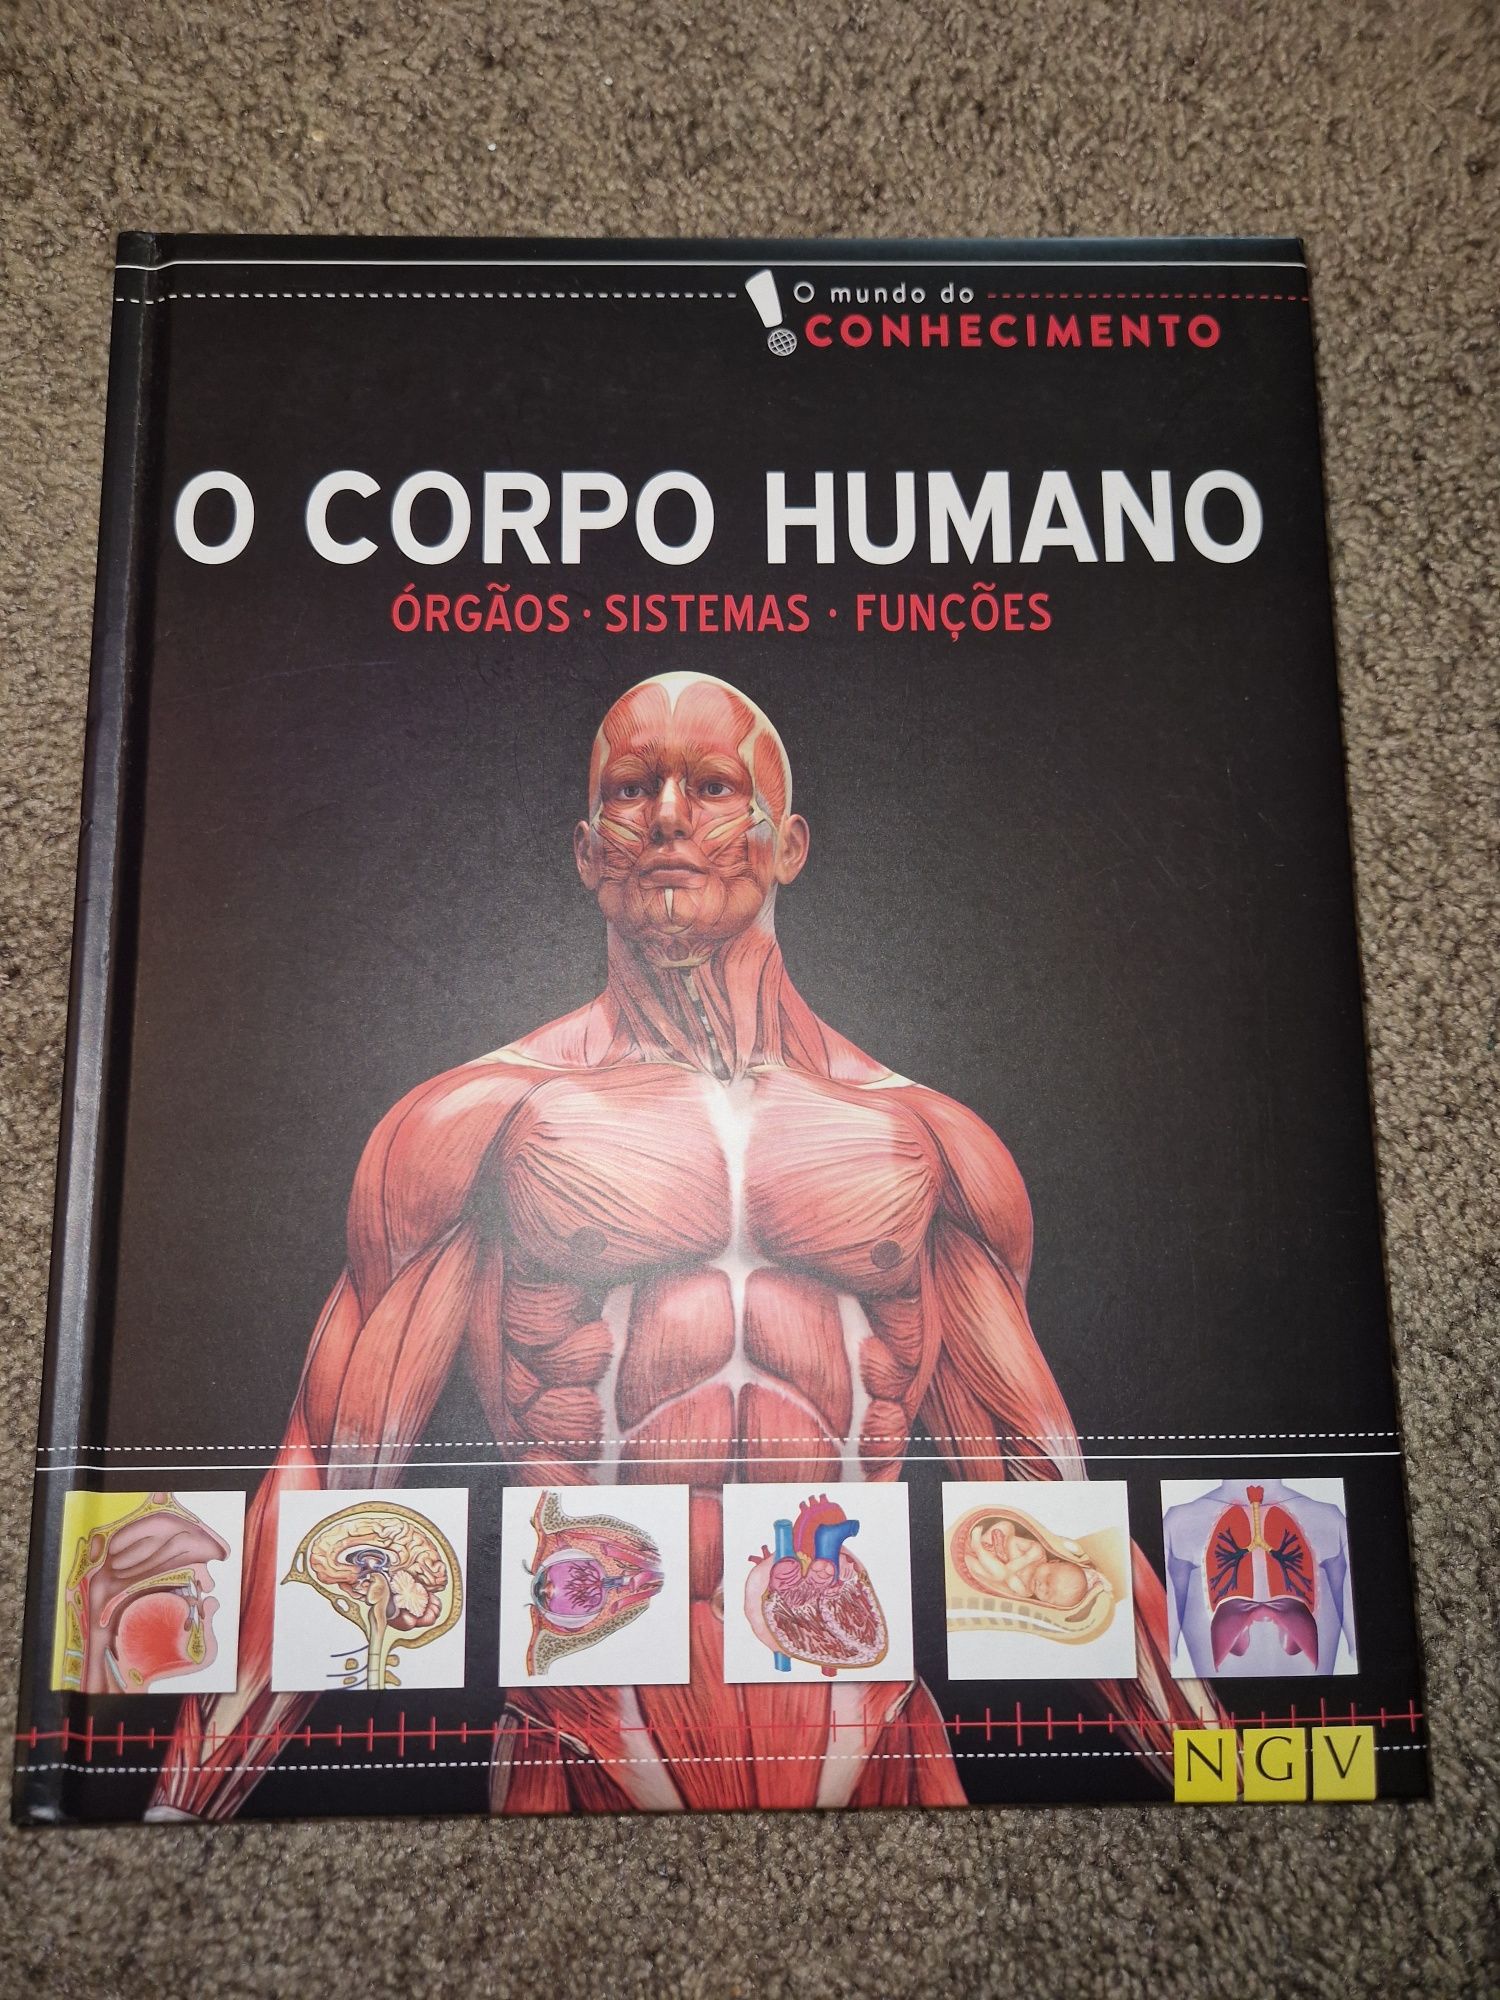 O corpo humano, conhecimento sobre medicina